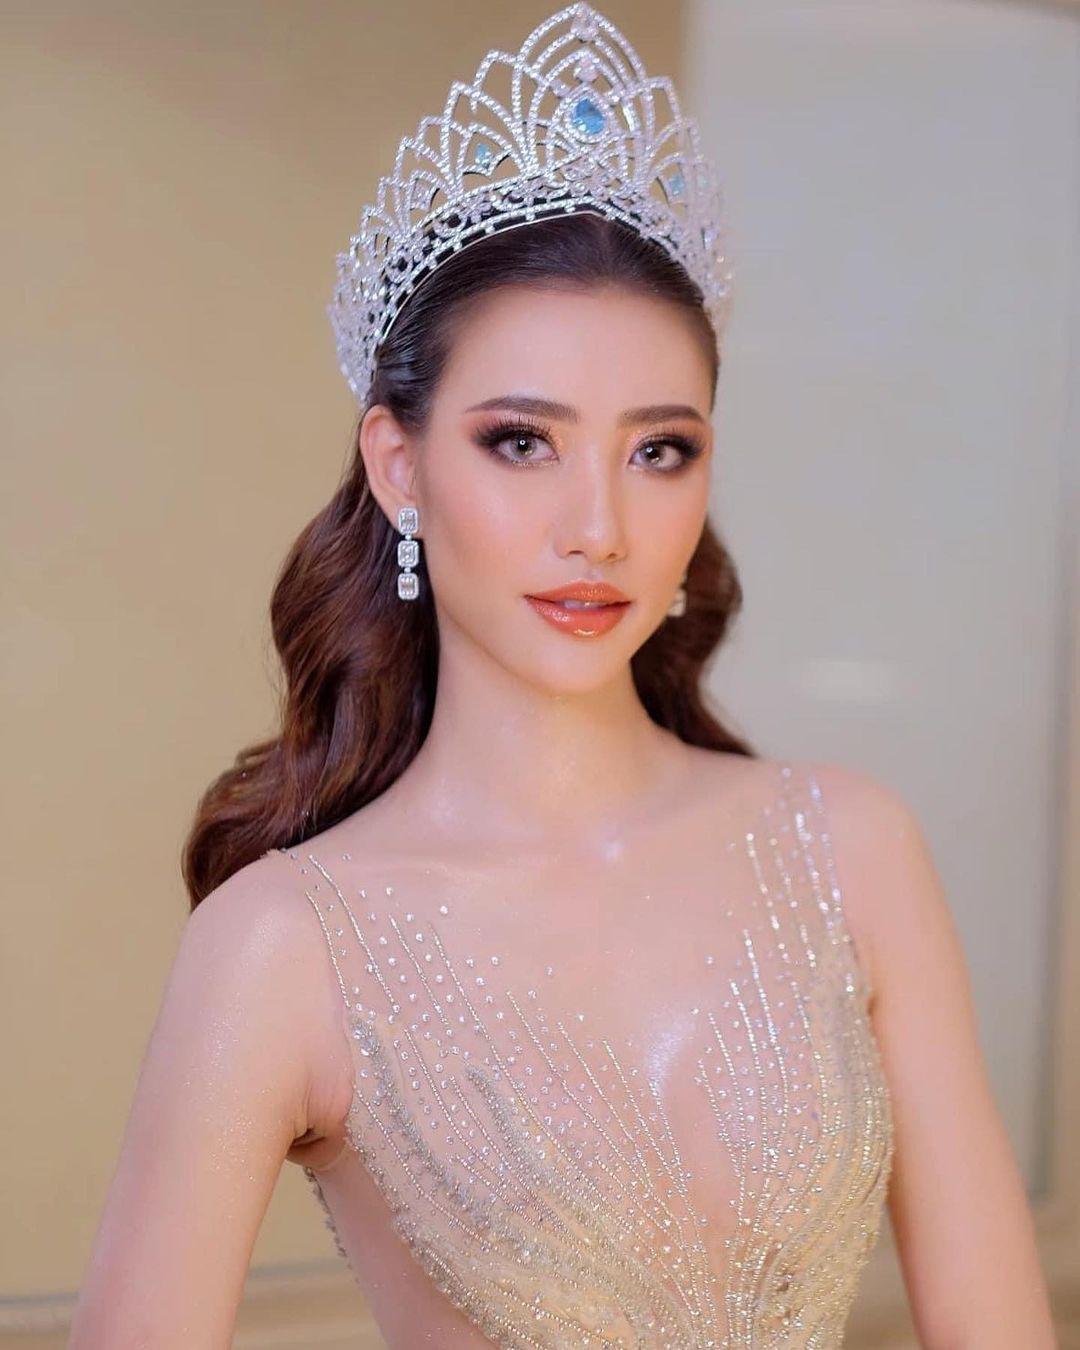 class="content__text"
 Vichitta Phonevilay ຈະຢູ່ໃນໃຈເຮົາຕະຫຼອດໄປ Miss Universe 2019 🥰 
 
ຮູບຈາກ : Alex Aliya-Makeup Artist
 #ນາງງາມຈັກກະວານລາວ 
 